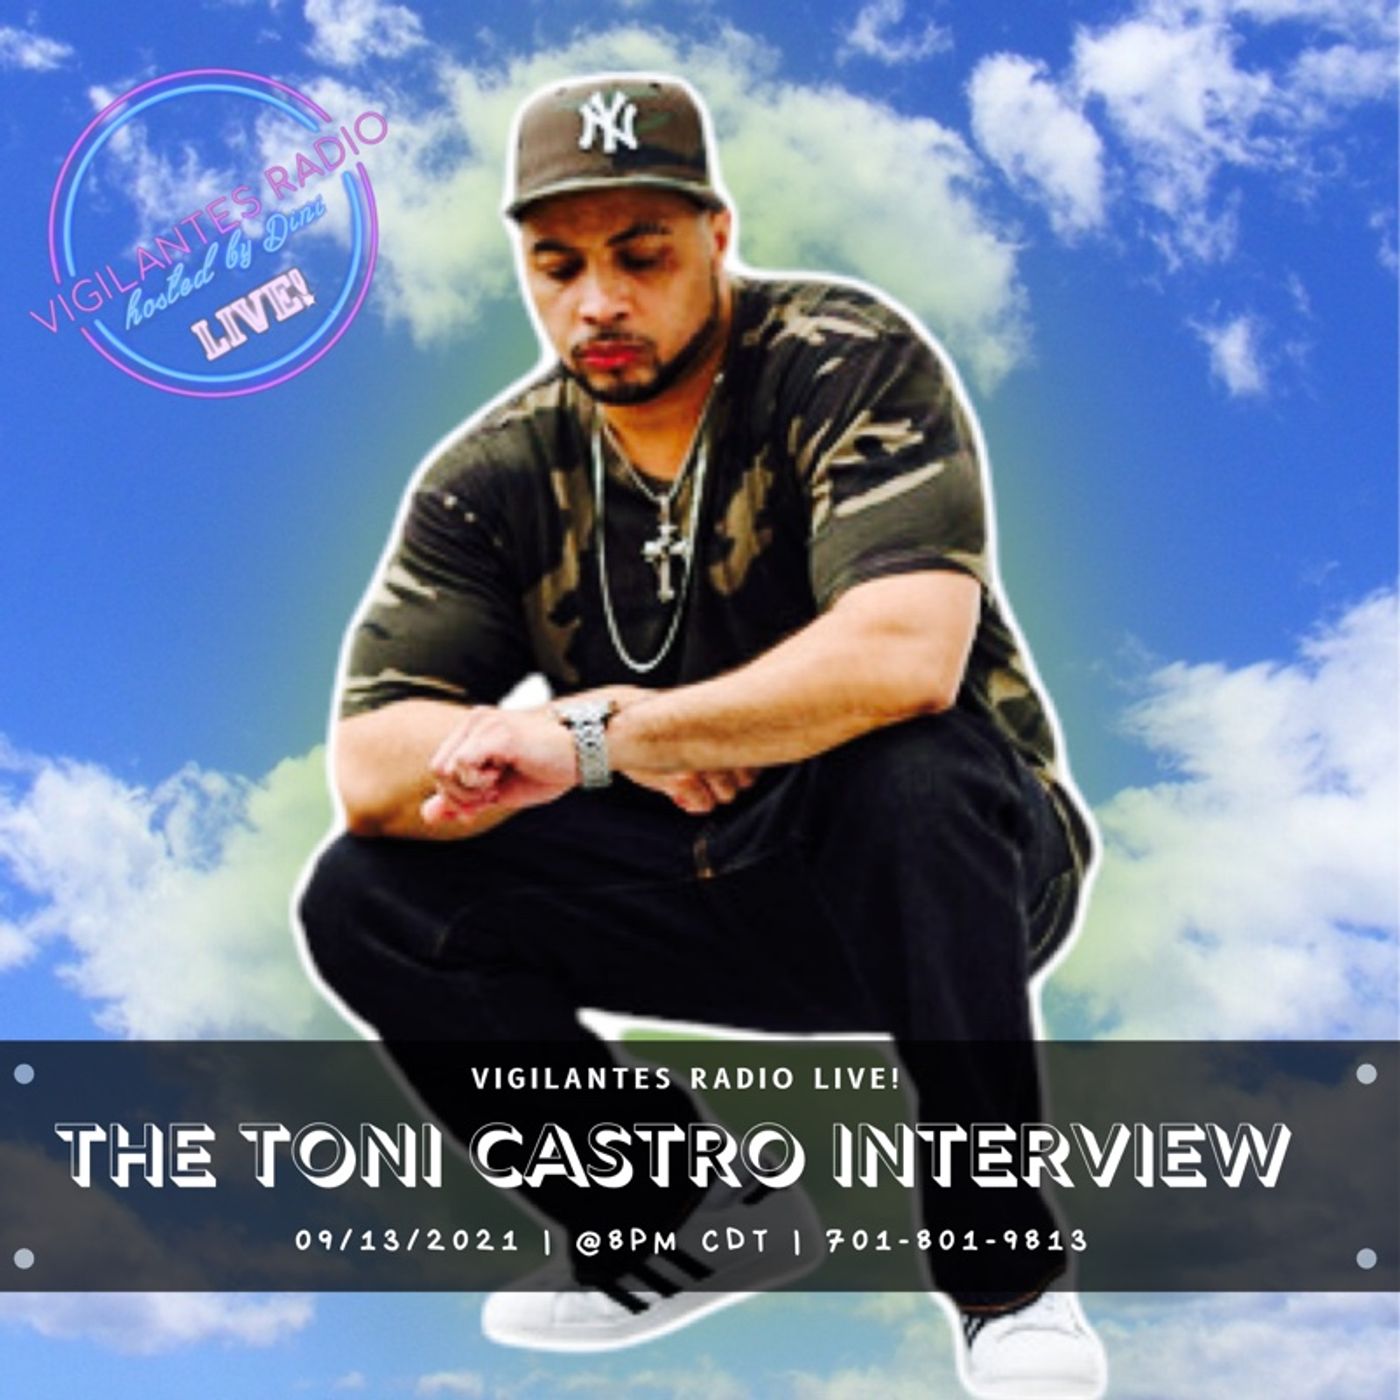 The Toni Castro Interview. Image